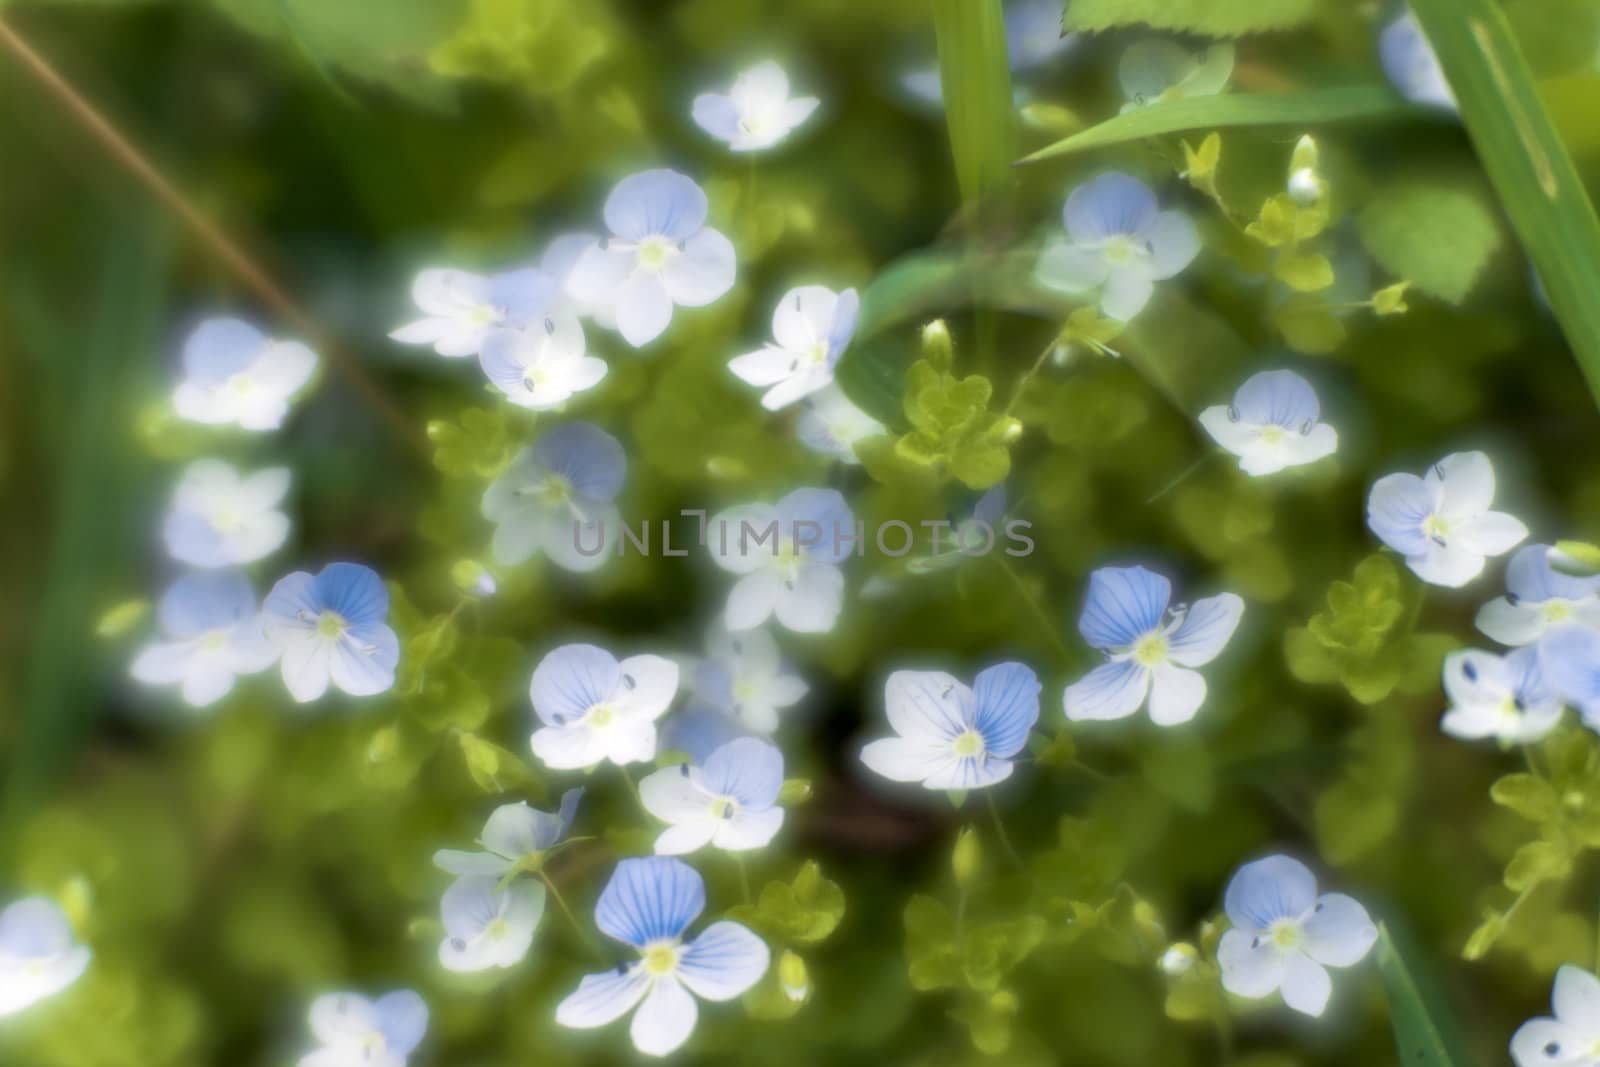 Wild flowers close-up through monocle lens